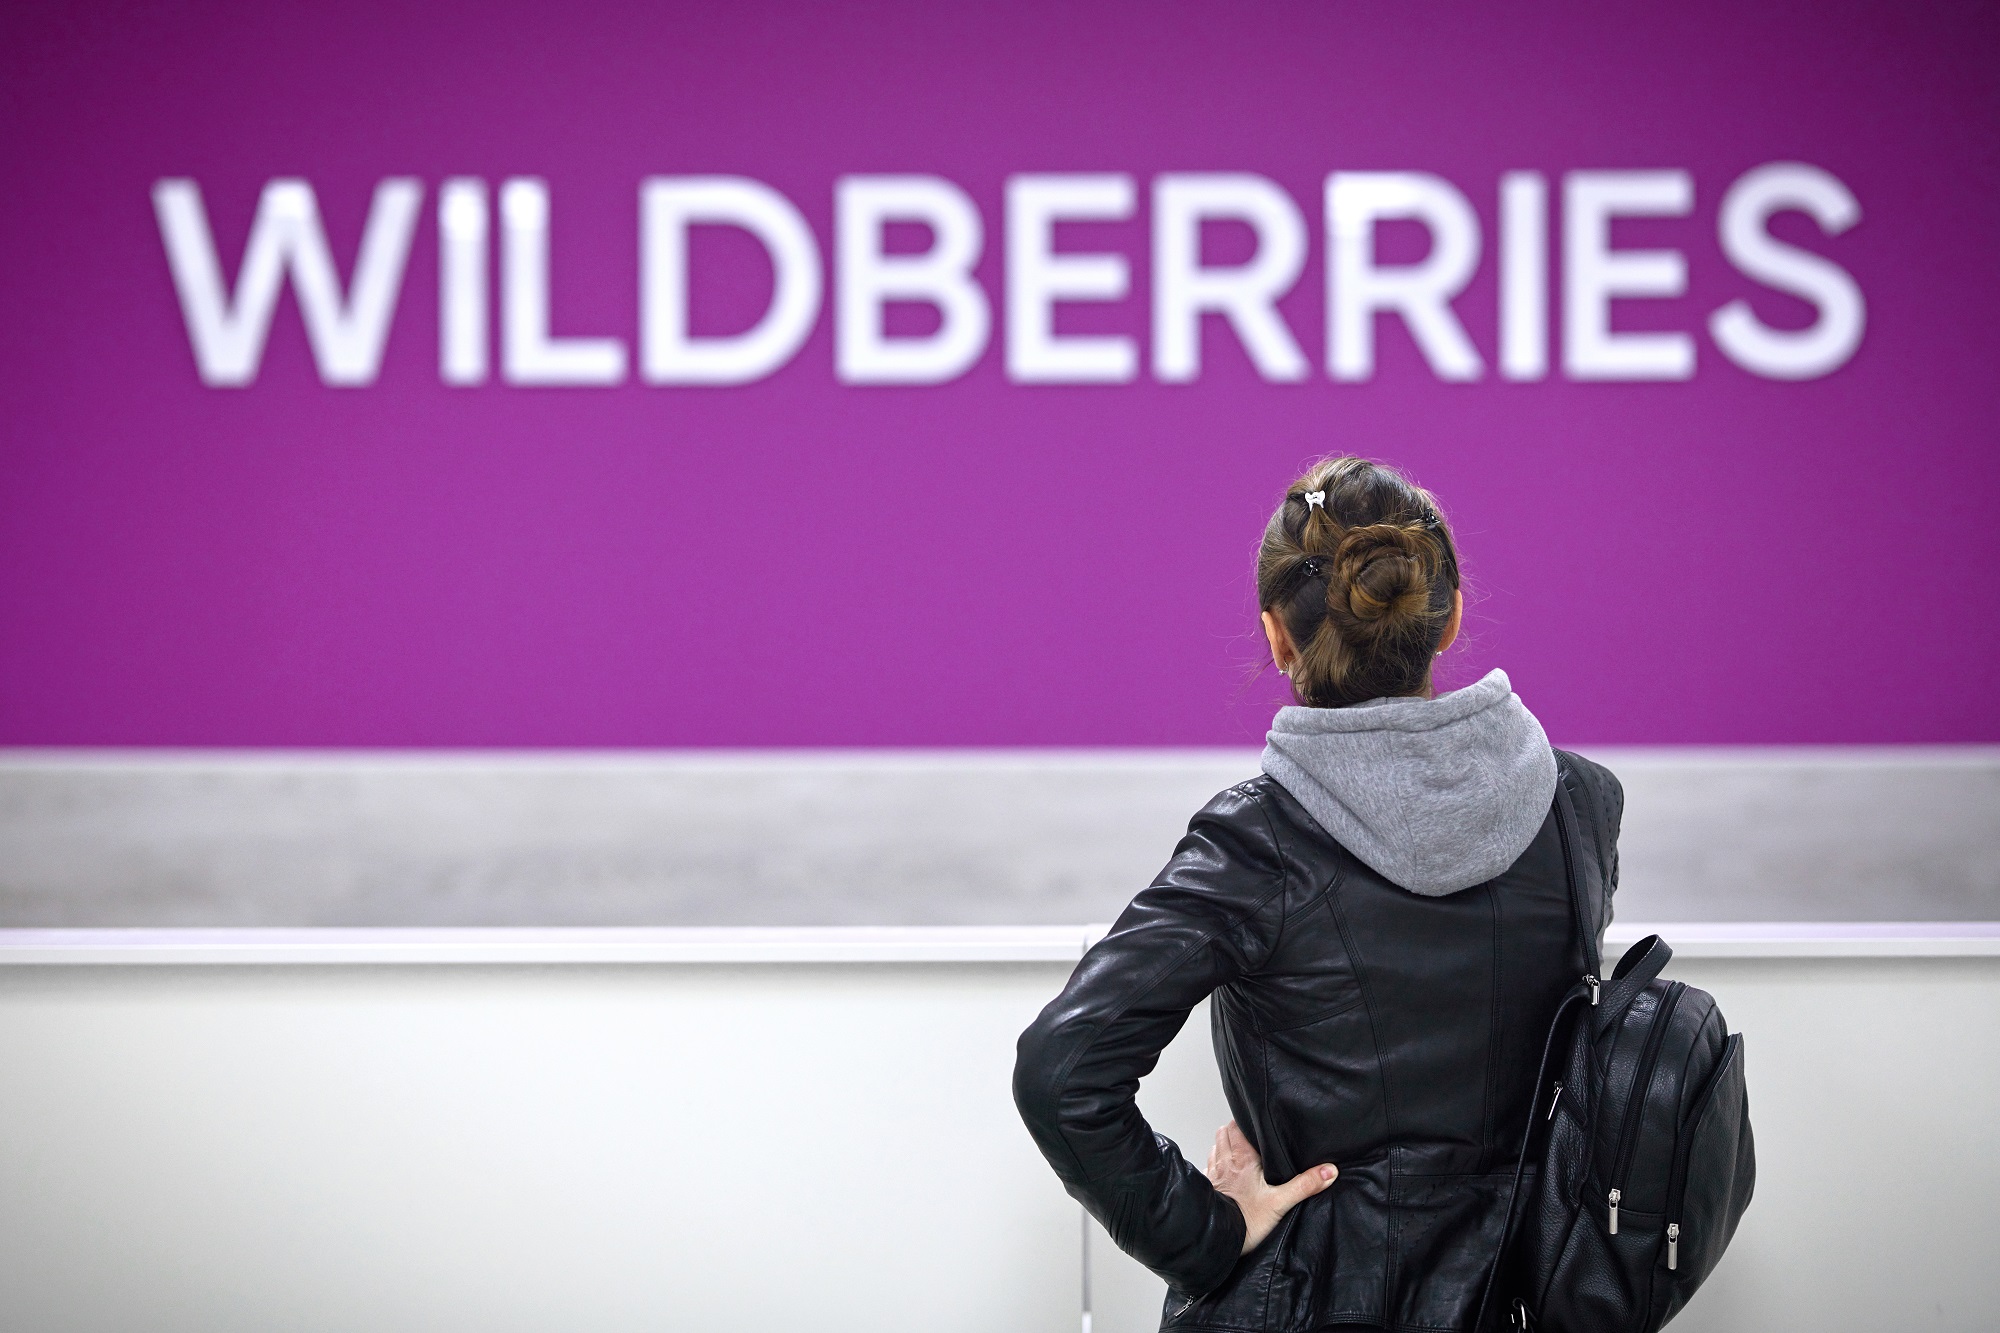 Wildberries travel